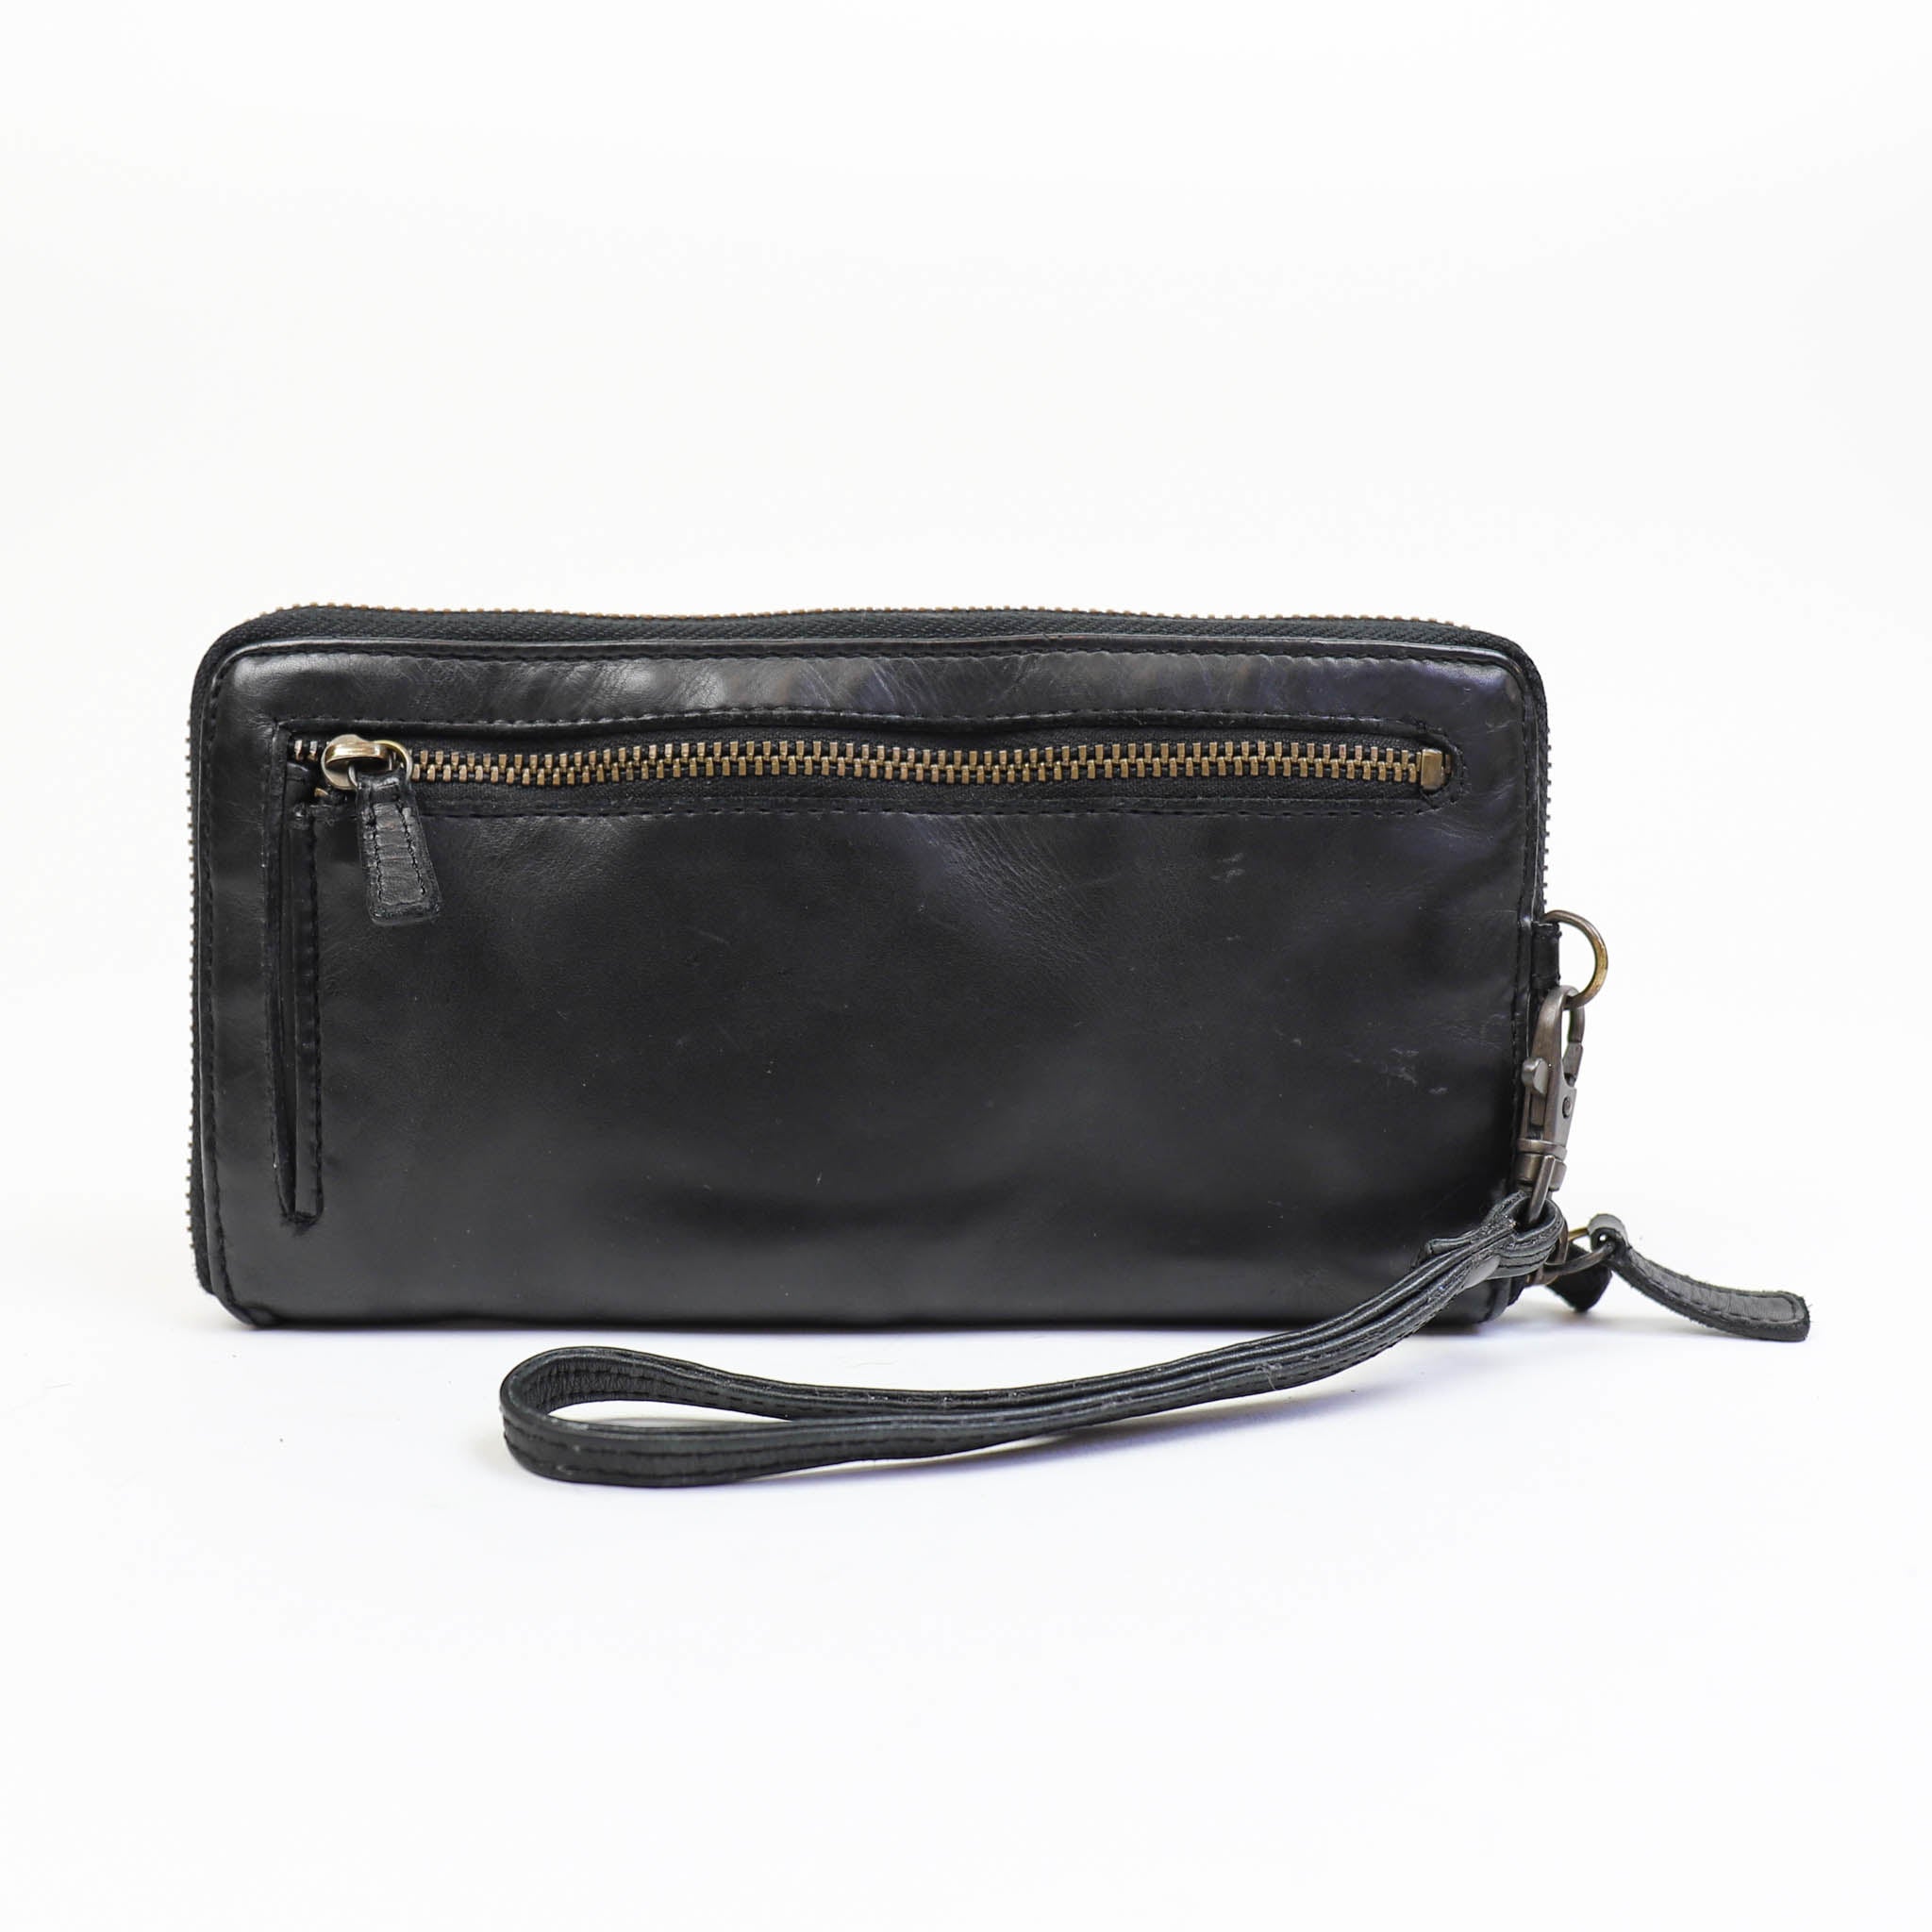 Zipper wallet 'Isa' black - CL 14851